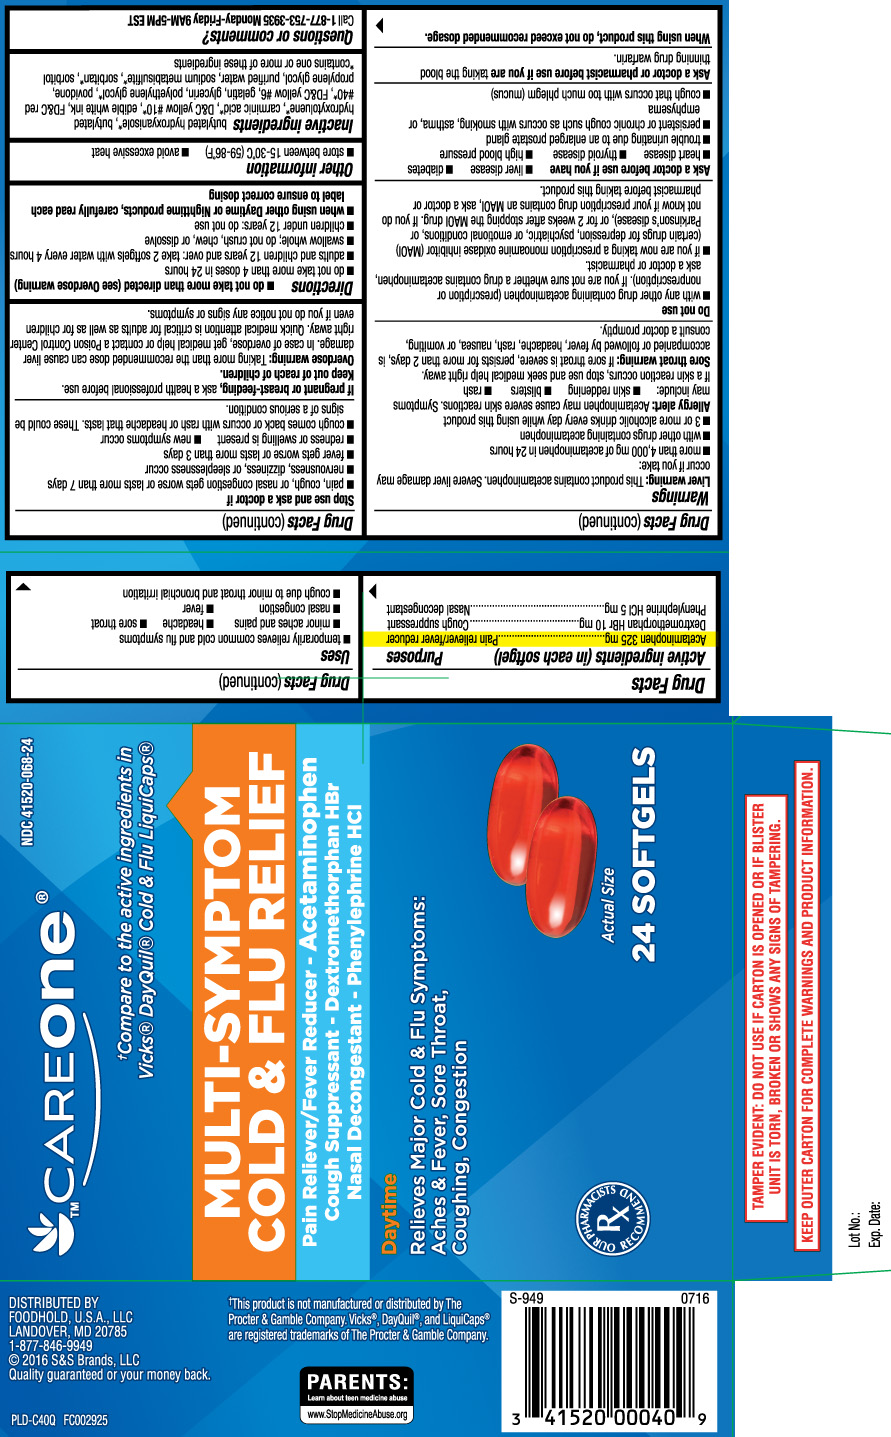 Acetaminophen 325 mg, Dextromethorphan HBr 10 mg Phenylephrine HCI 5 mg